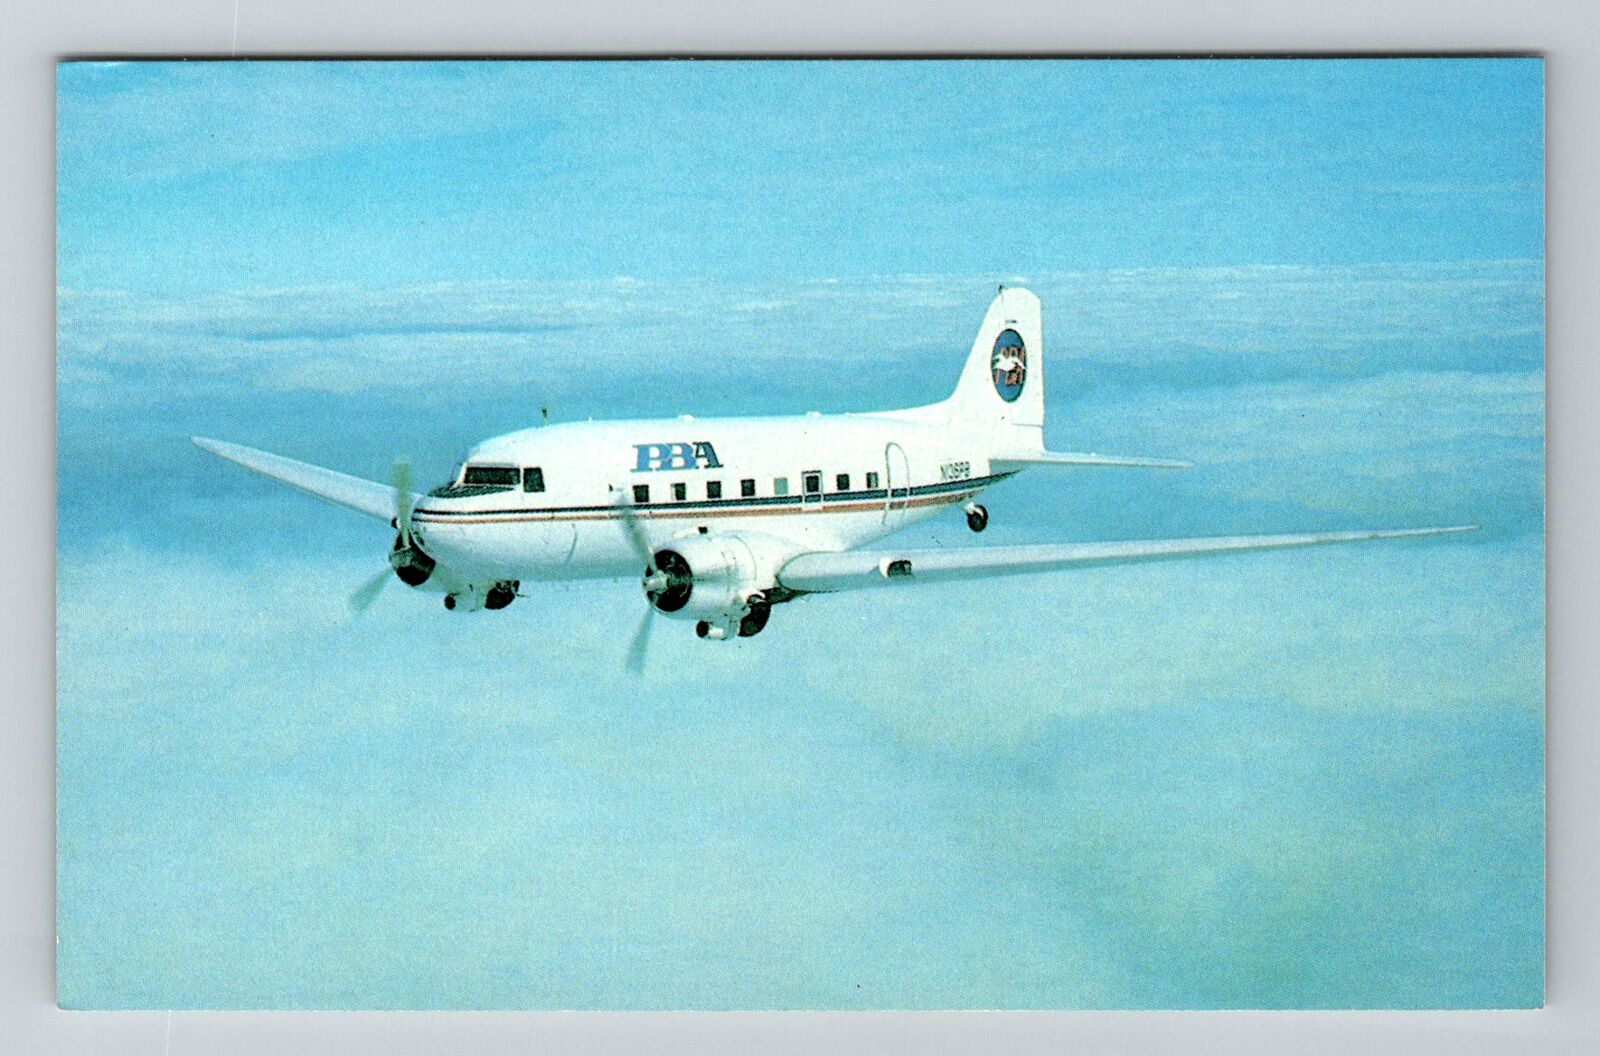 The Douglas DC-3, Aircraft Plane, Transportation, Vintage Postcard